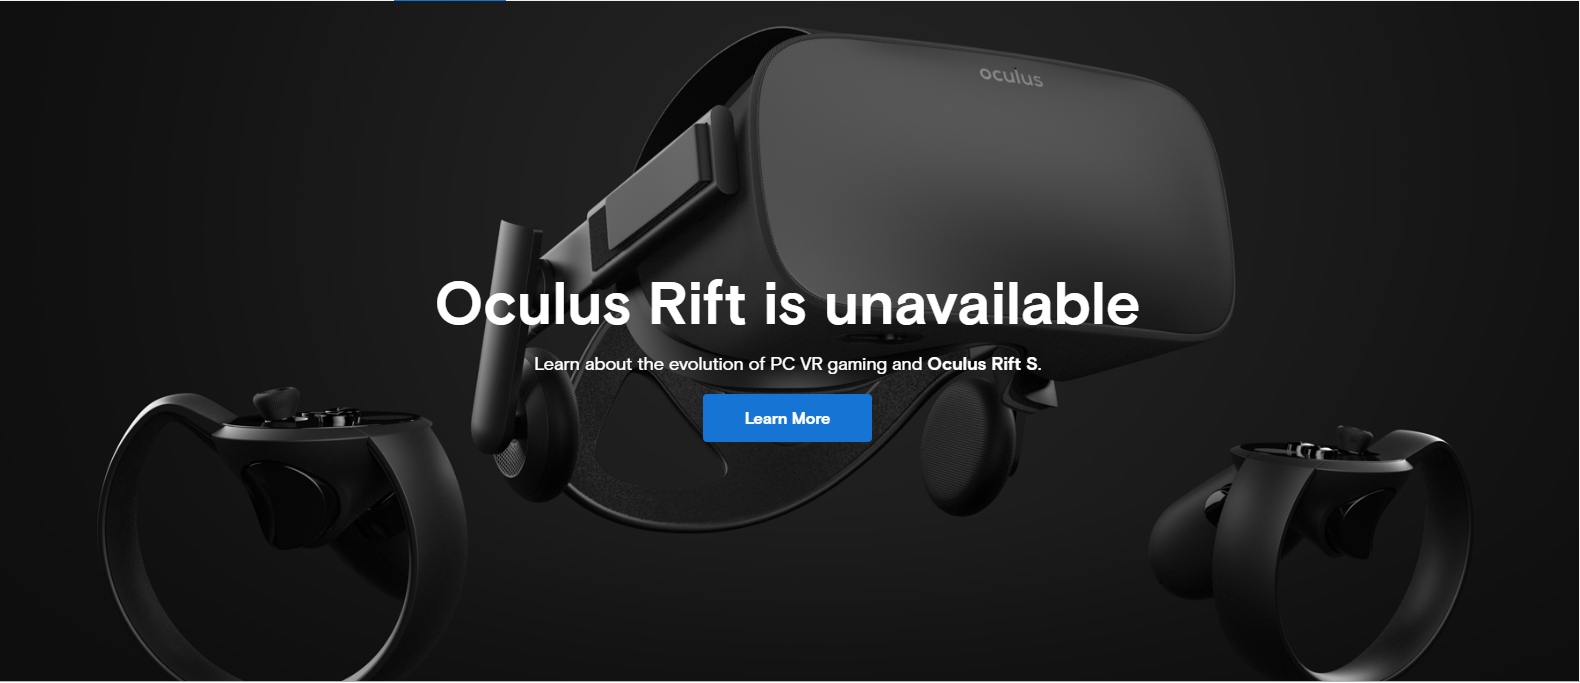 oculus rift s unavailable